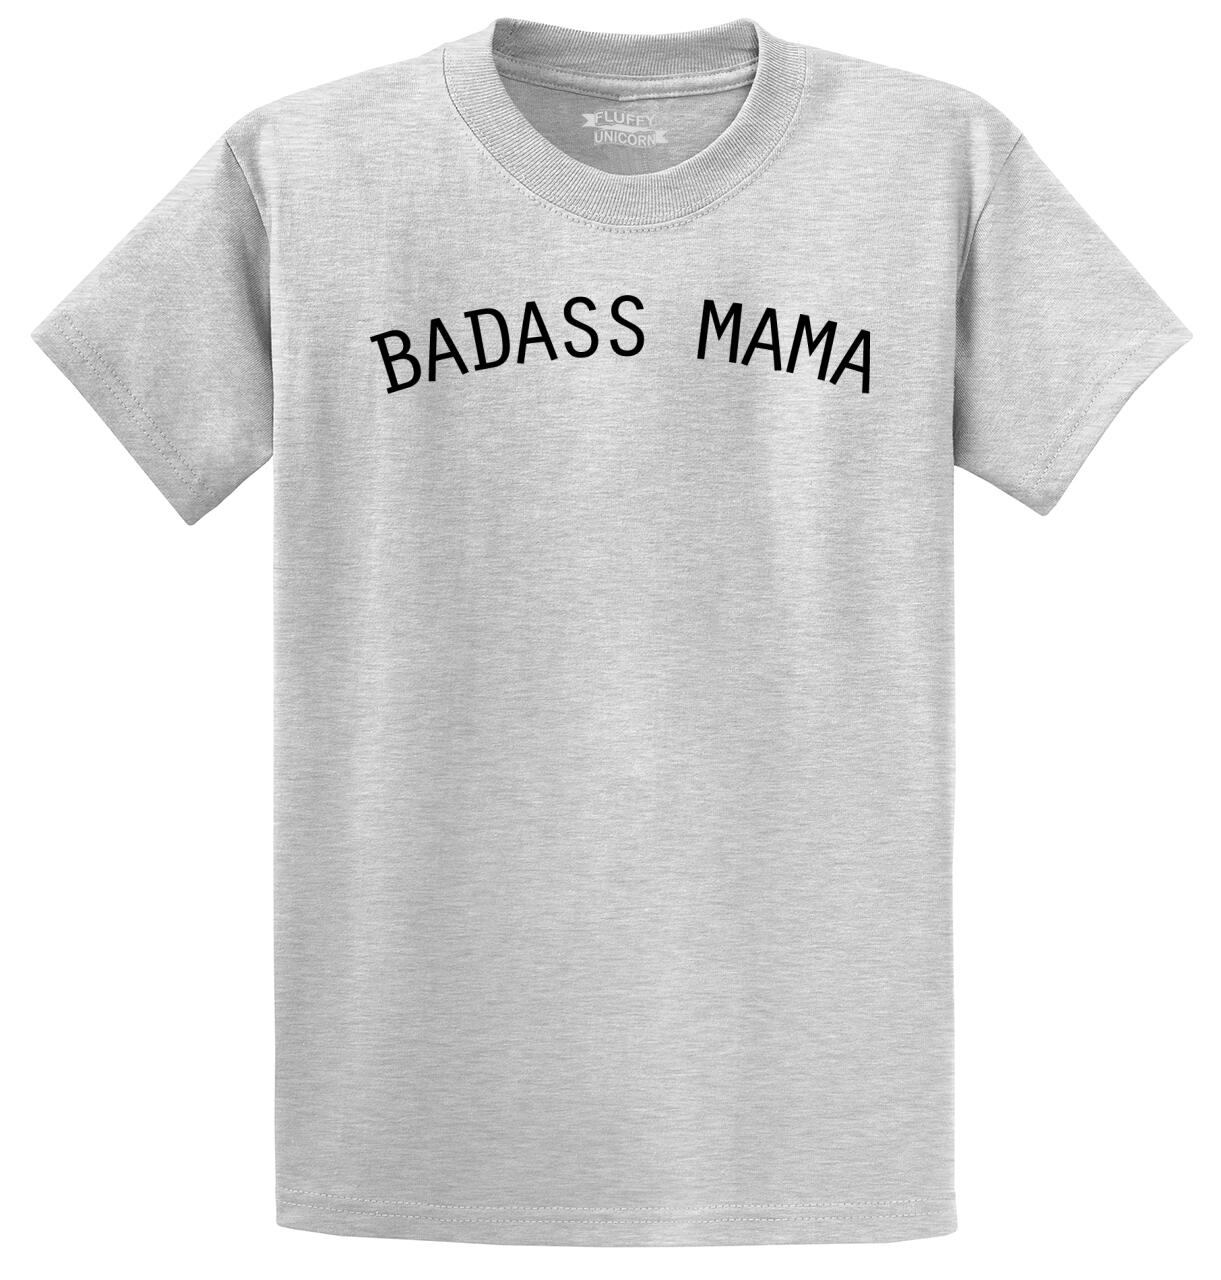 Mothers Day Mother's Day Gift Mama Gift Mom Gift Badass Mama T-shirt Motherhood Mama Tee New Mom Gift Birthday Gift For Mom